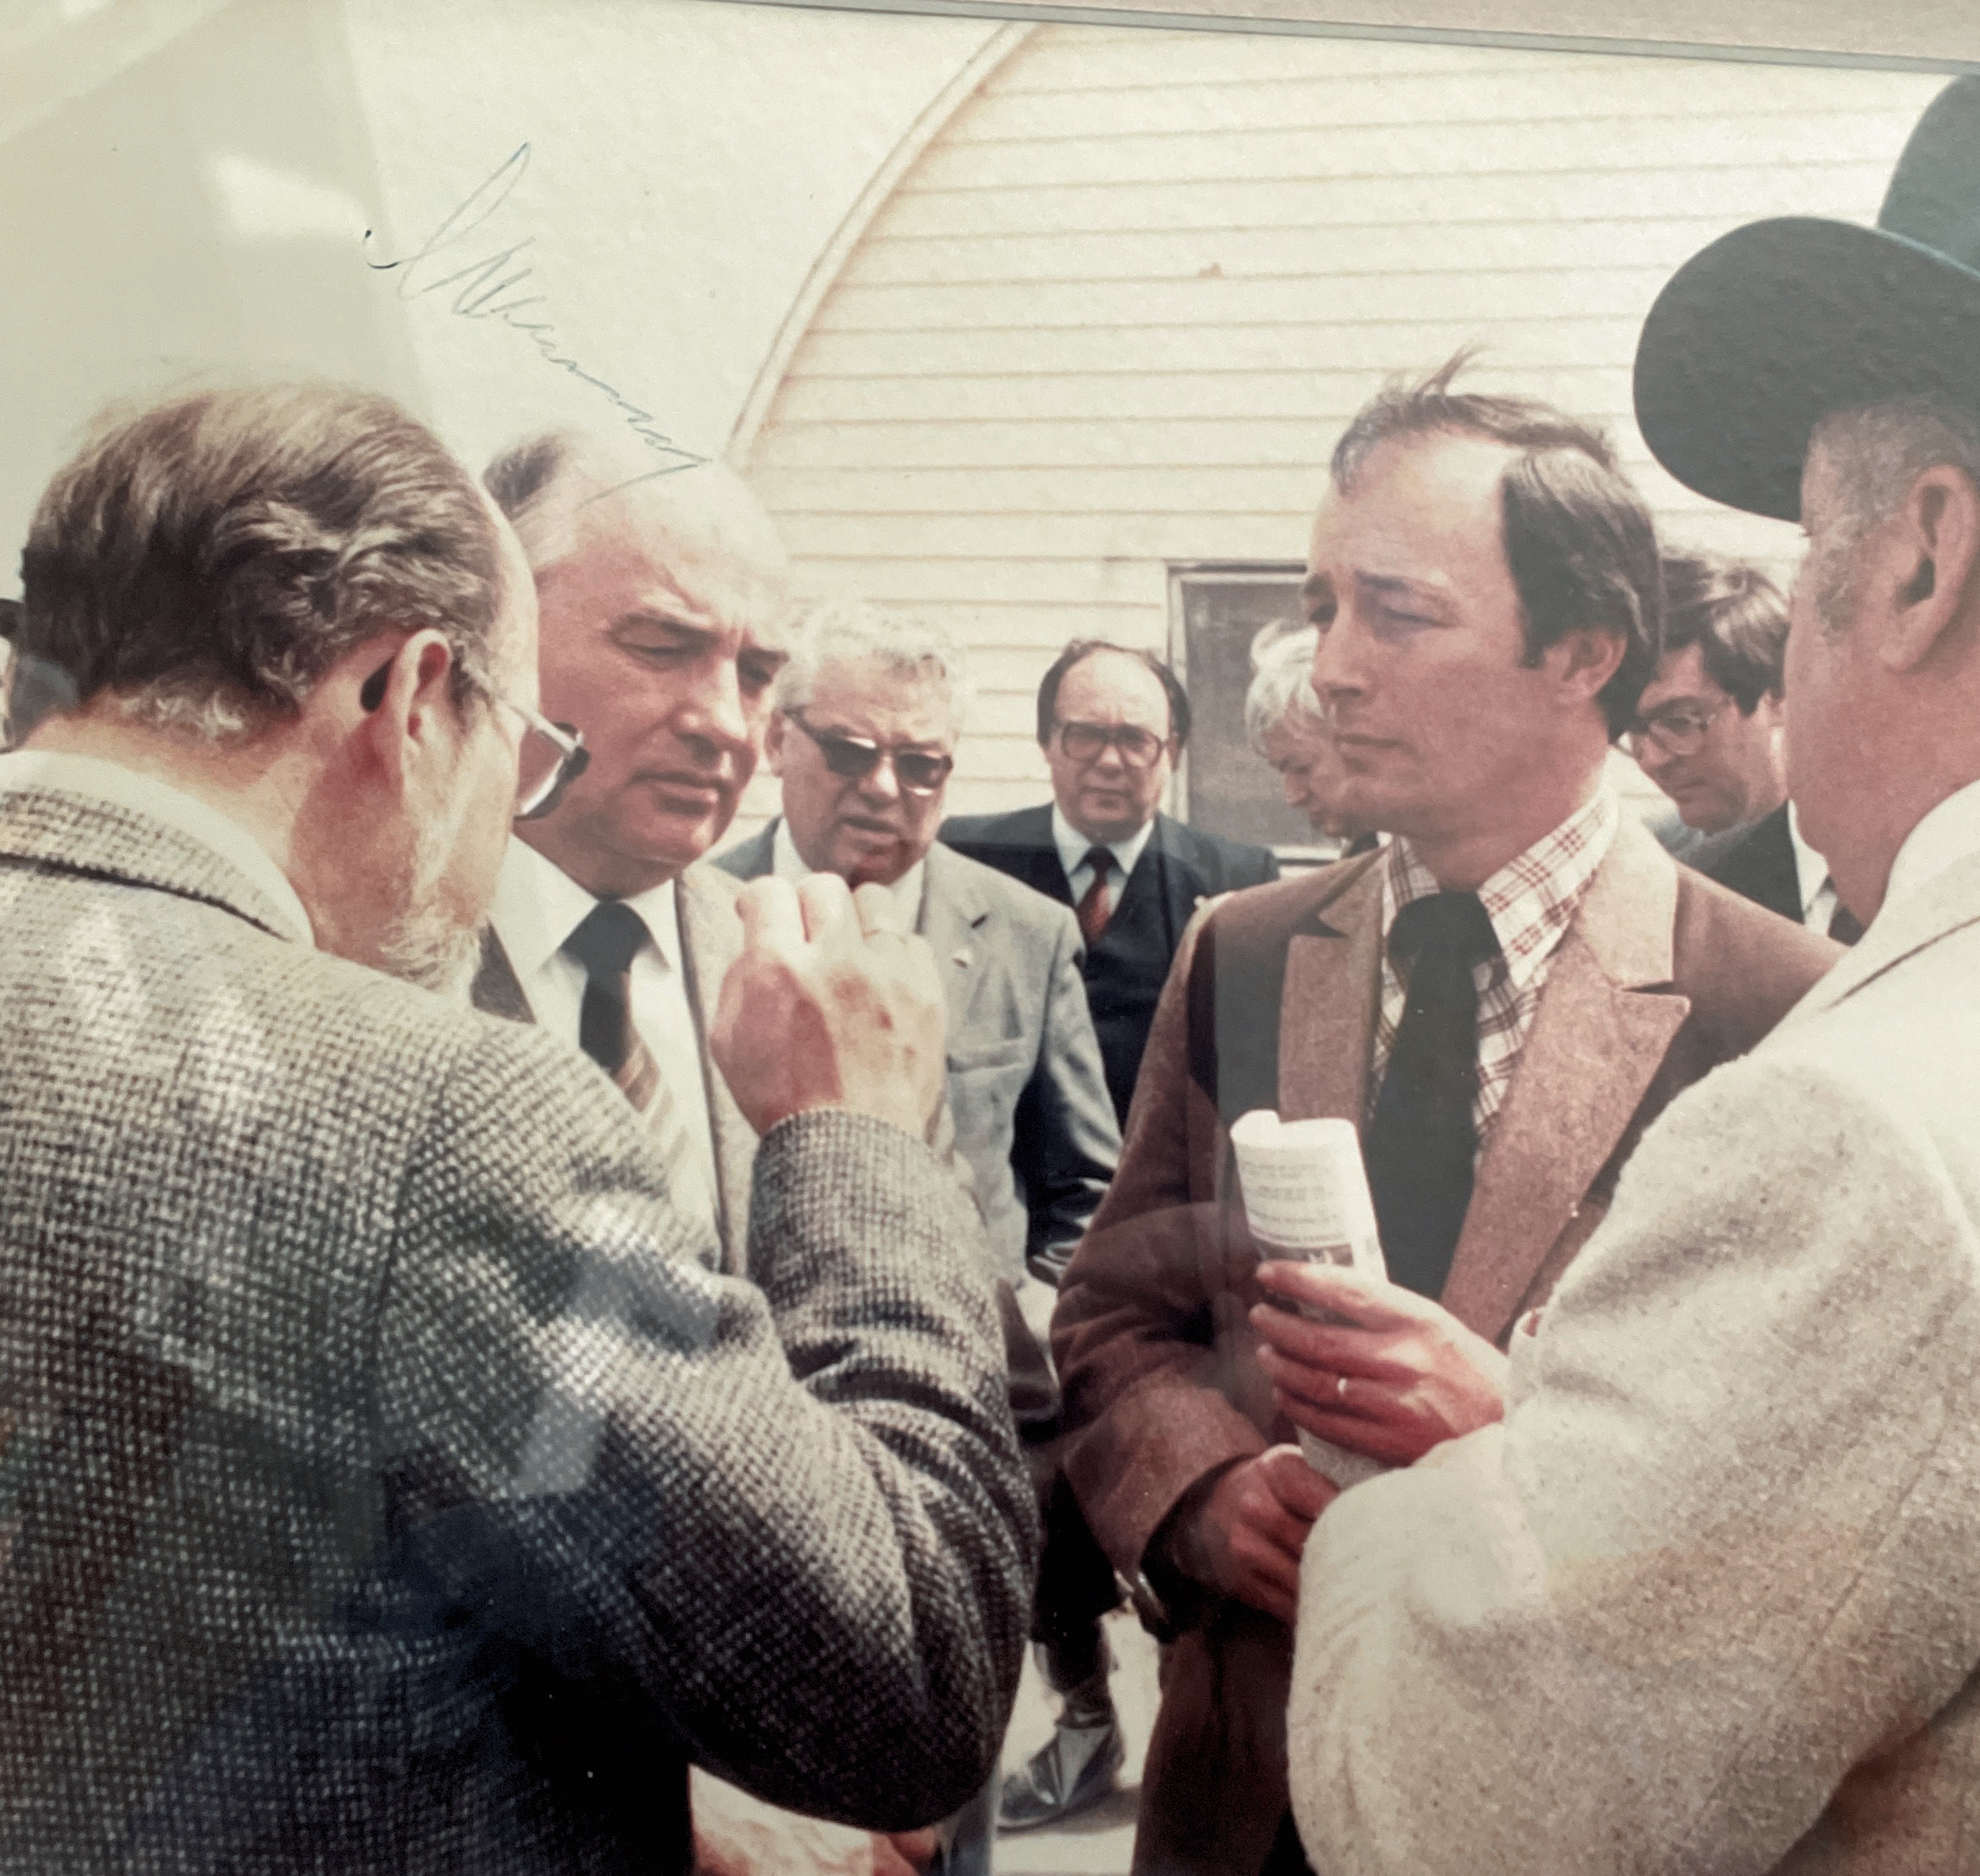 Gorbachev and Yakovlev 1983 visit to Western Breeders signed by Gorbachev